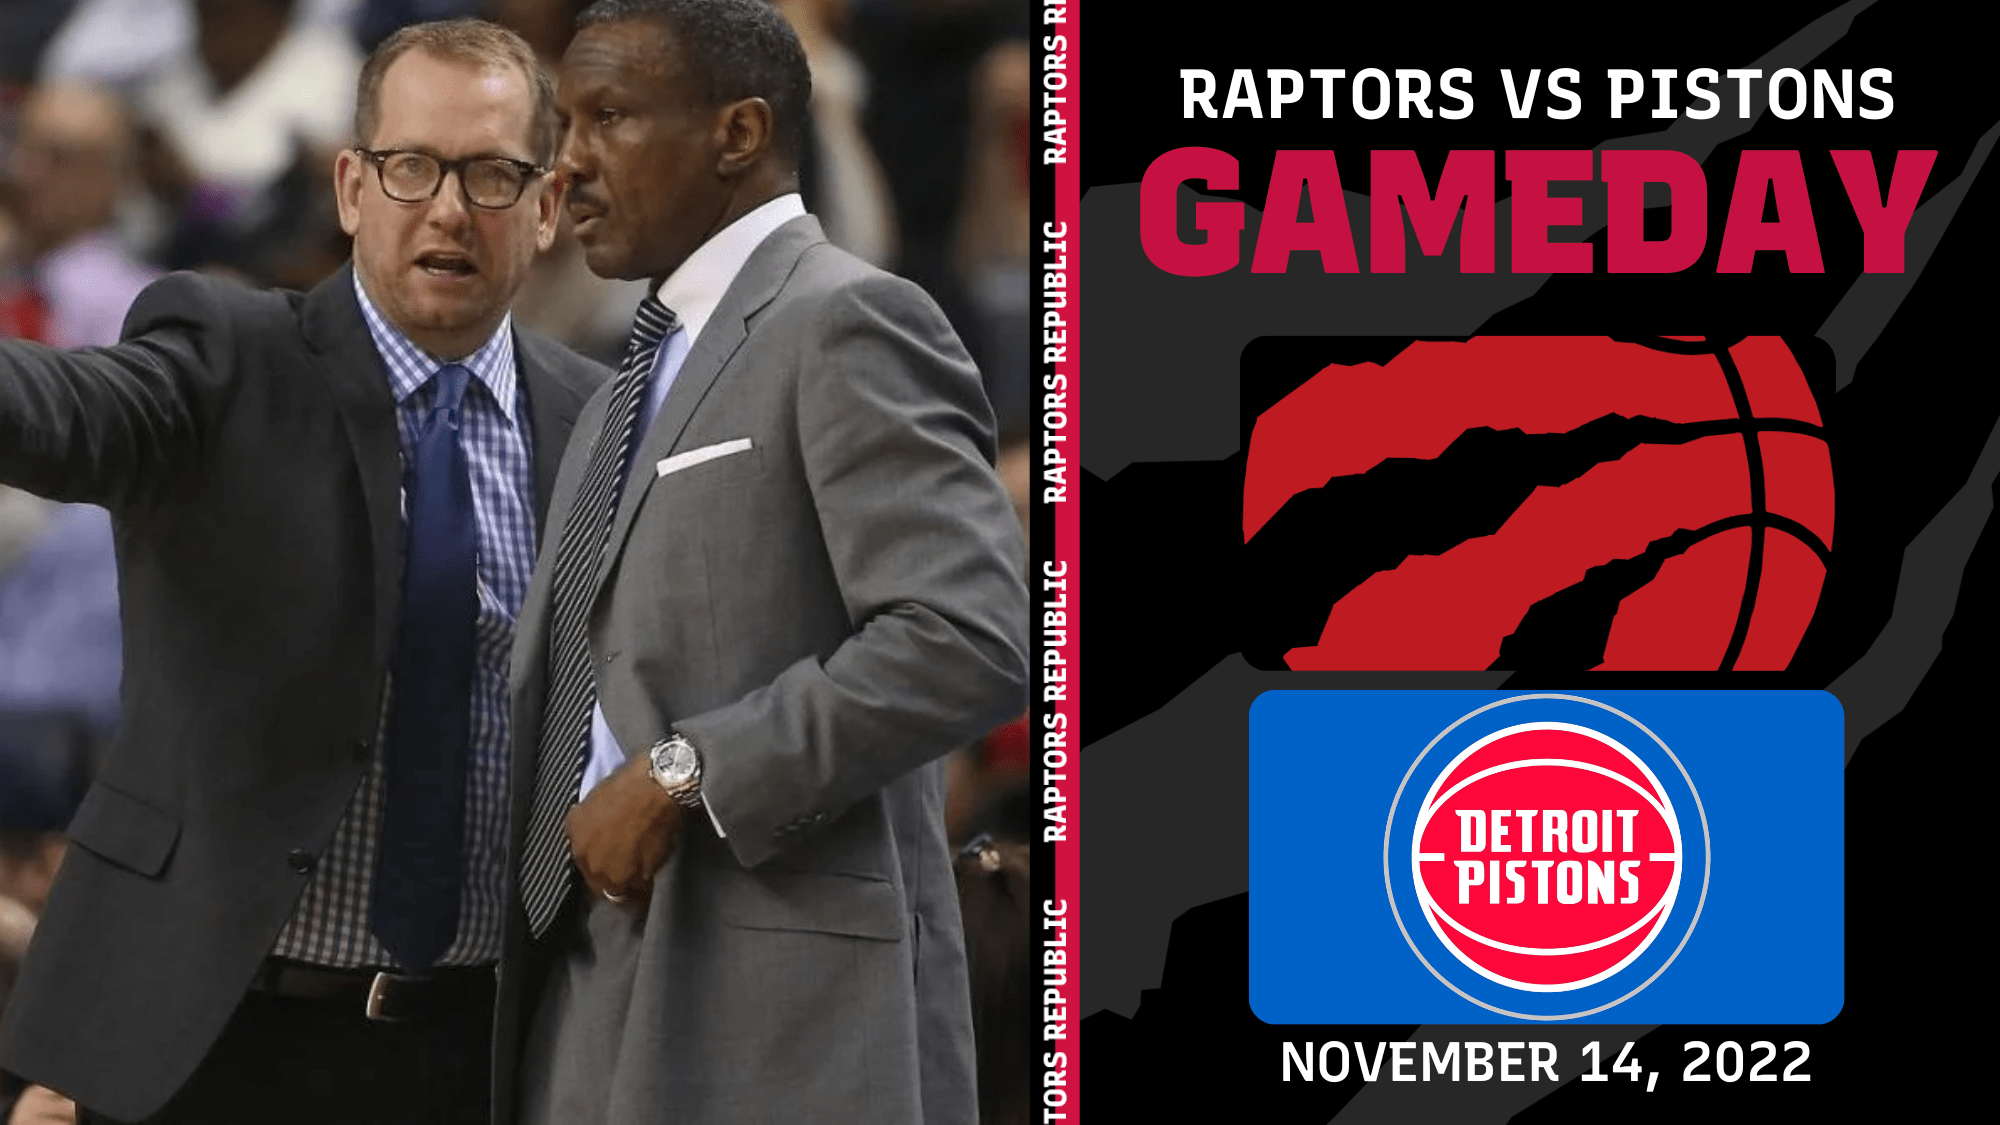 Gameday: Raptors @ Pistons, November 14